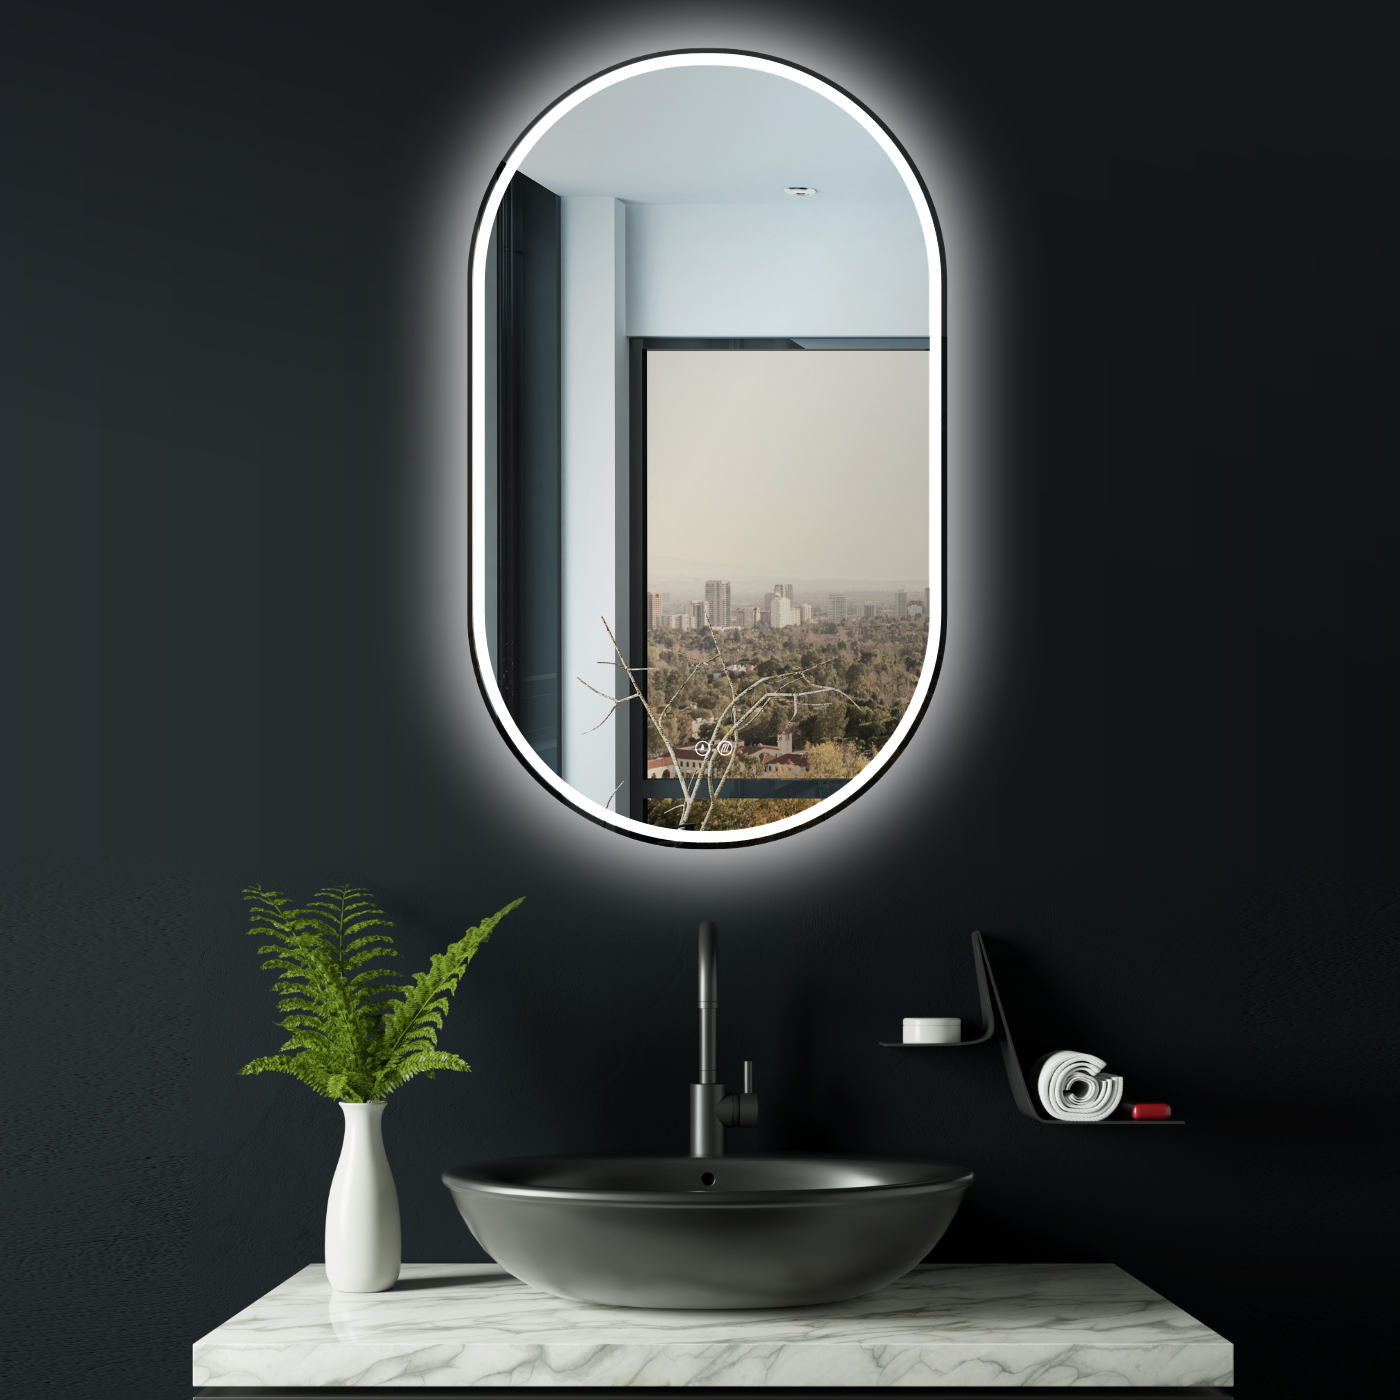 LED Badspiegel, design oval Badspiegel, Badspiegel mit led Beleuchtung